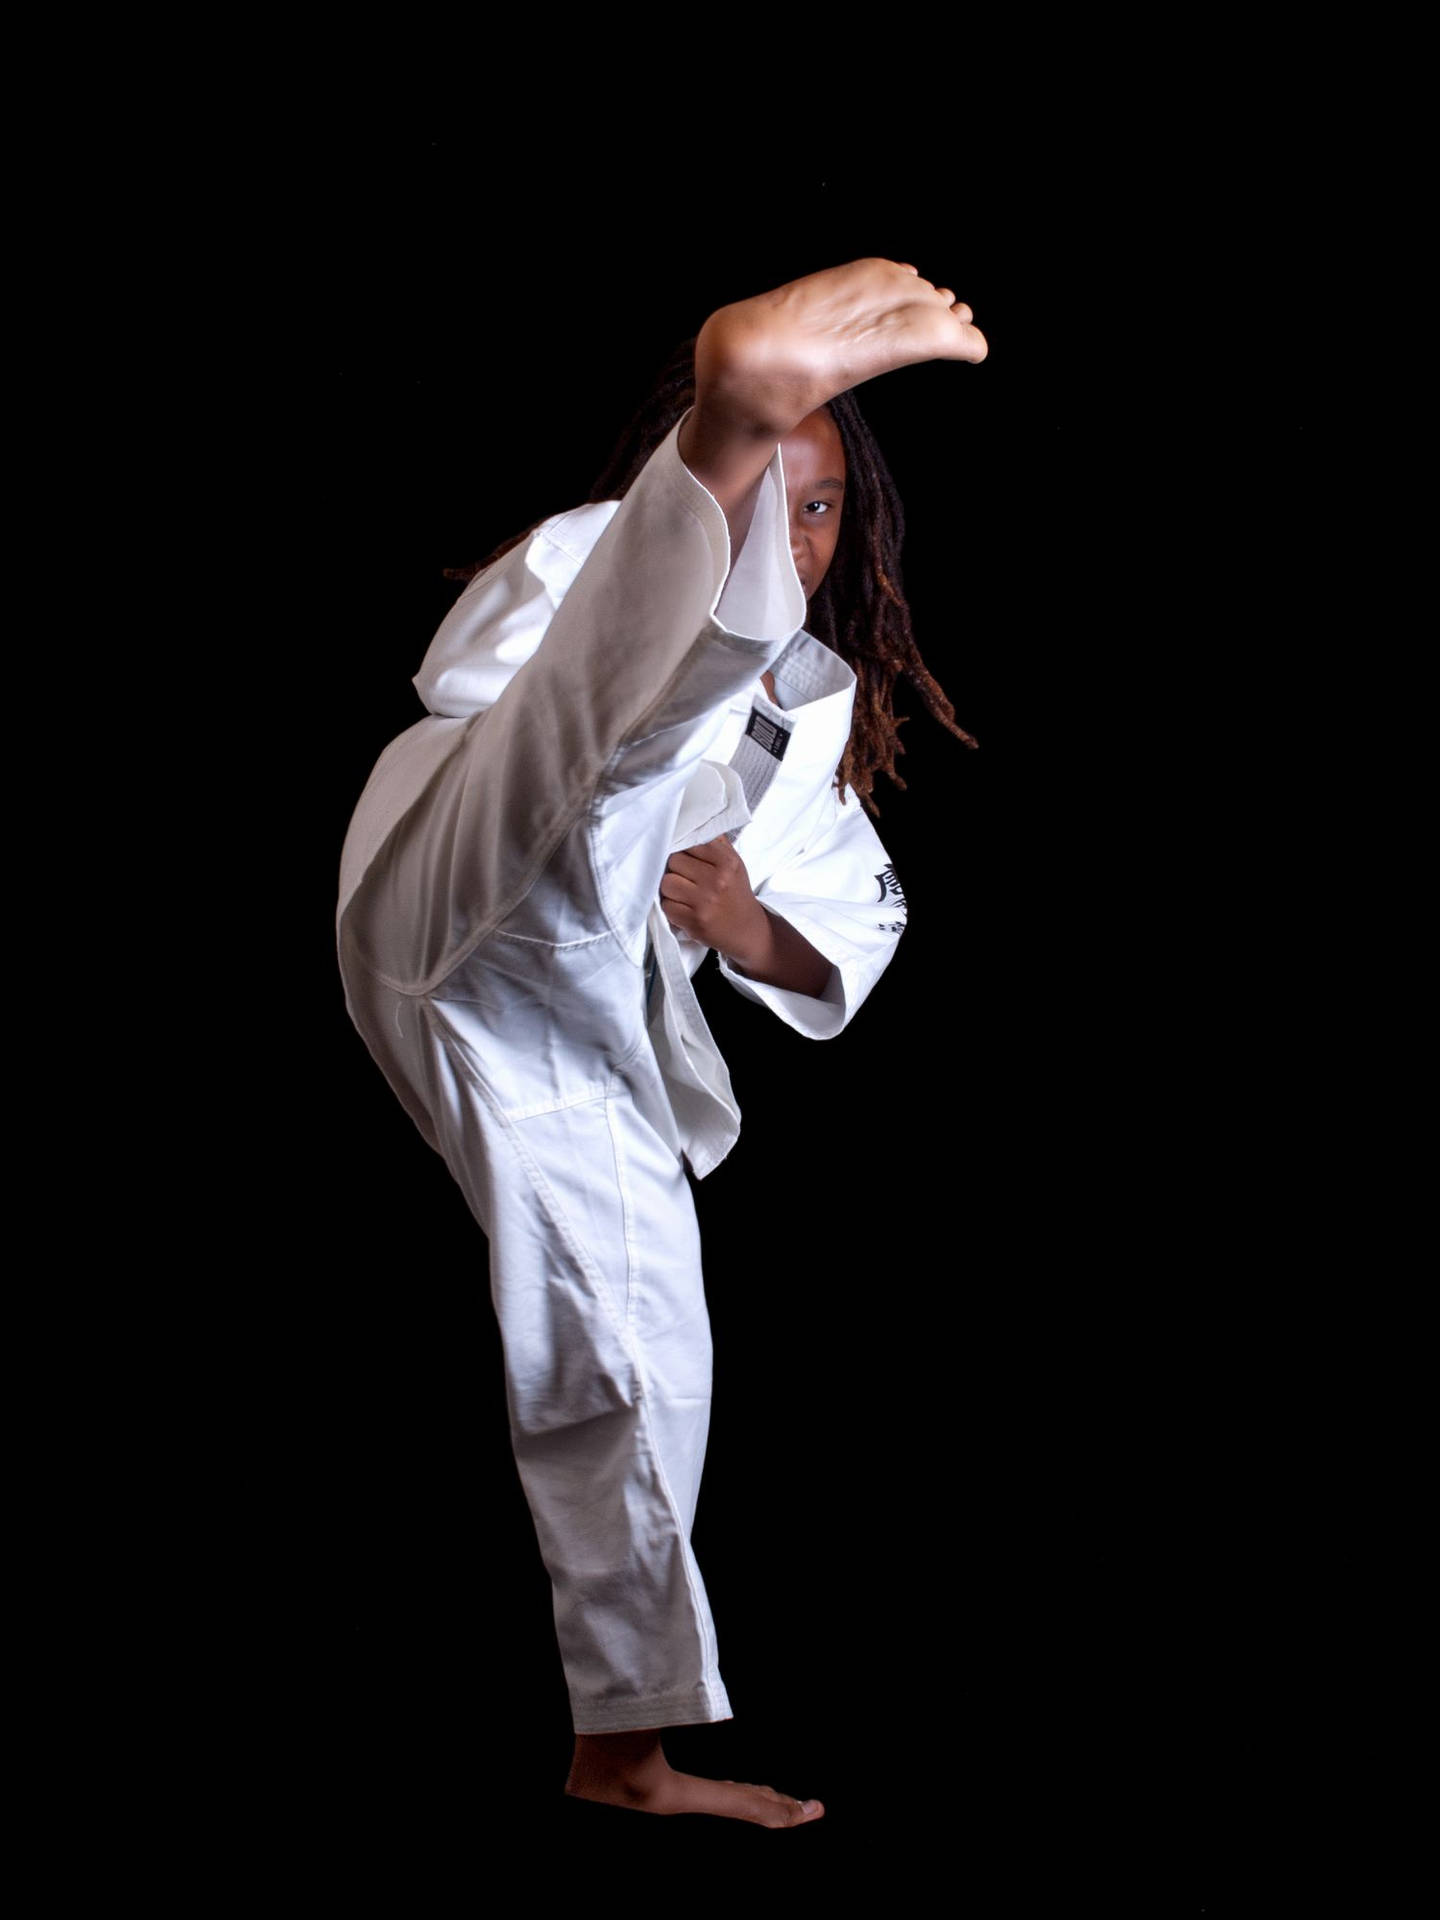 Karate Kick Black Background Wallpaper